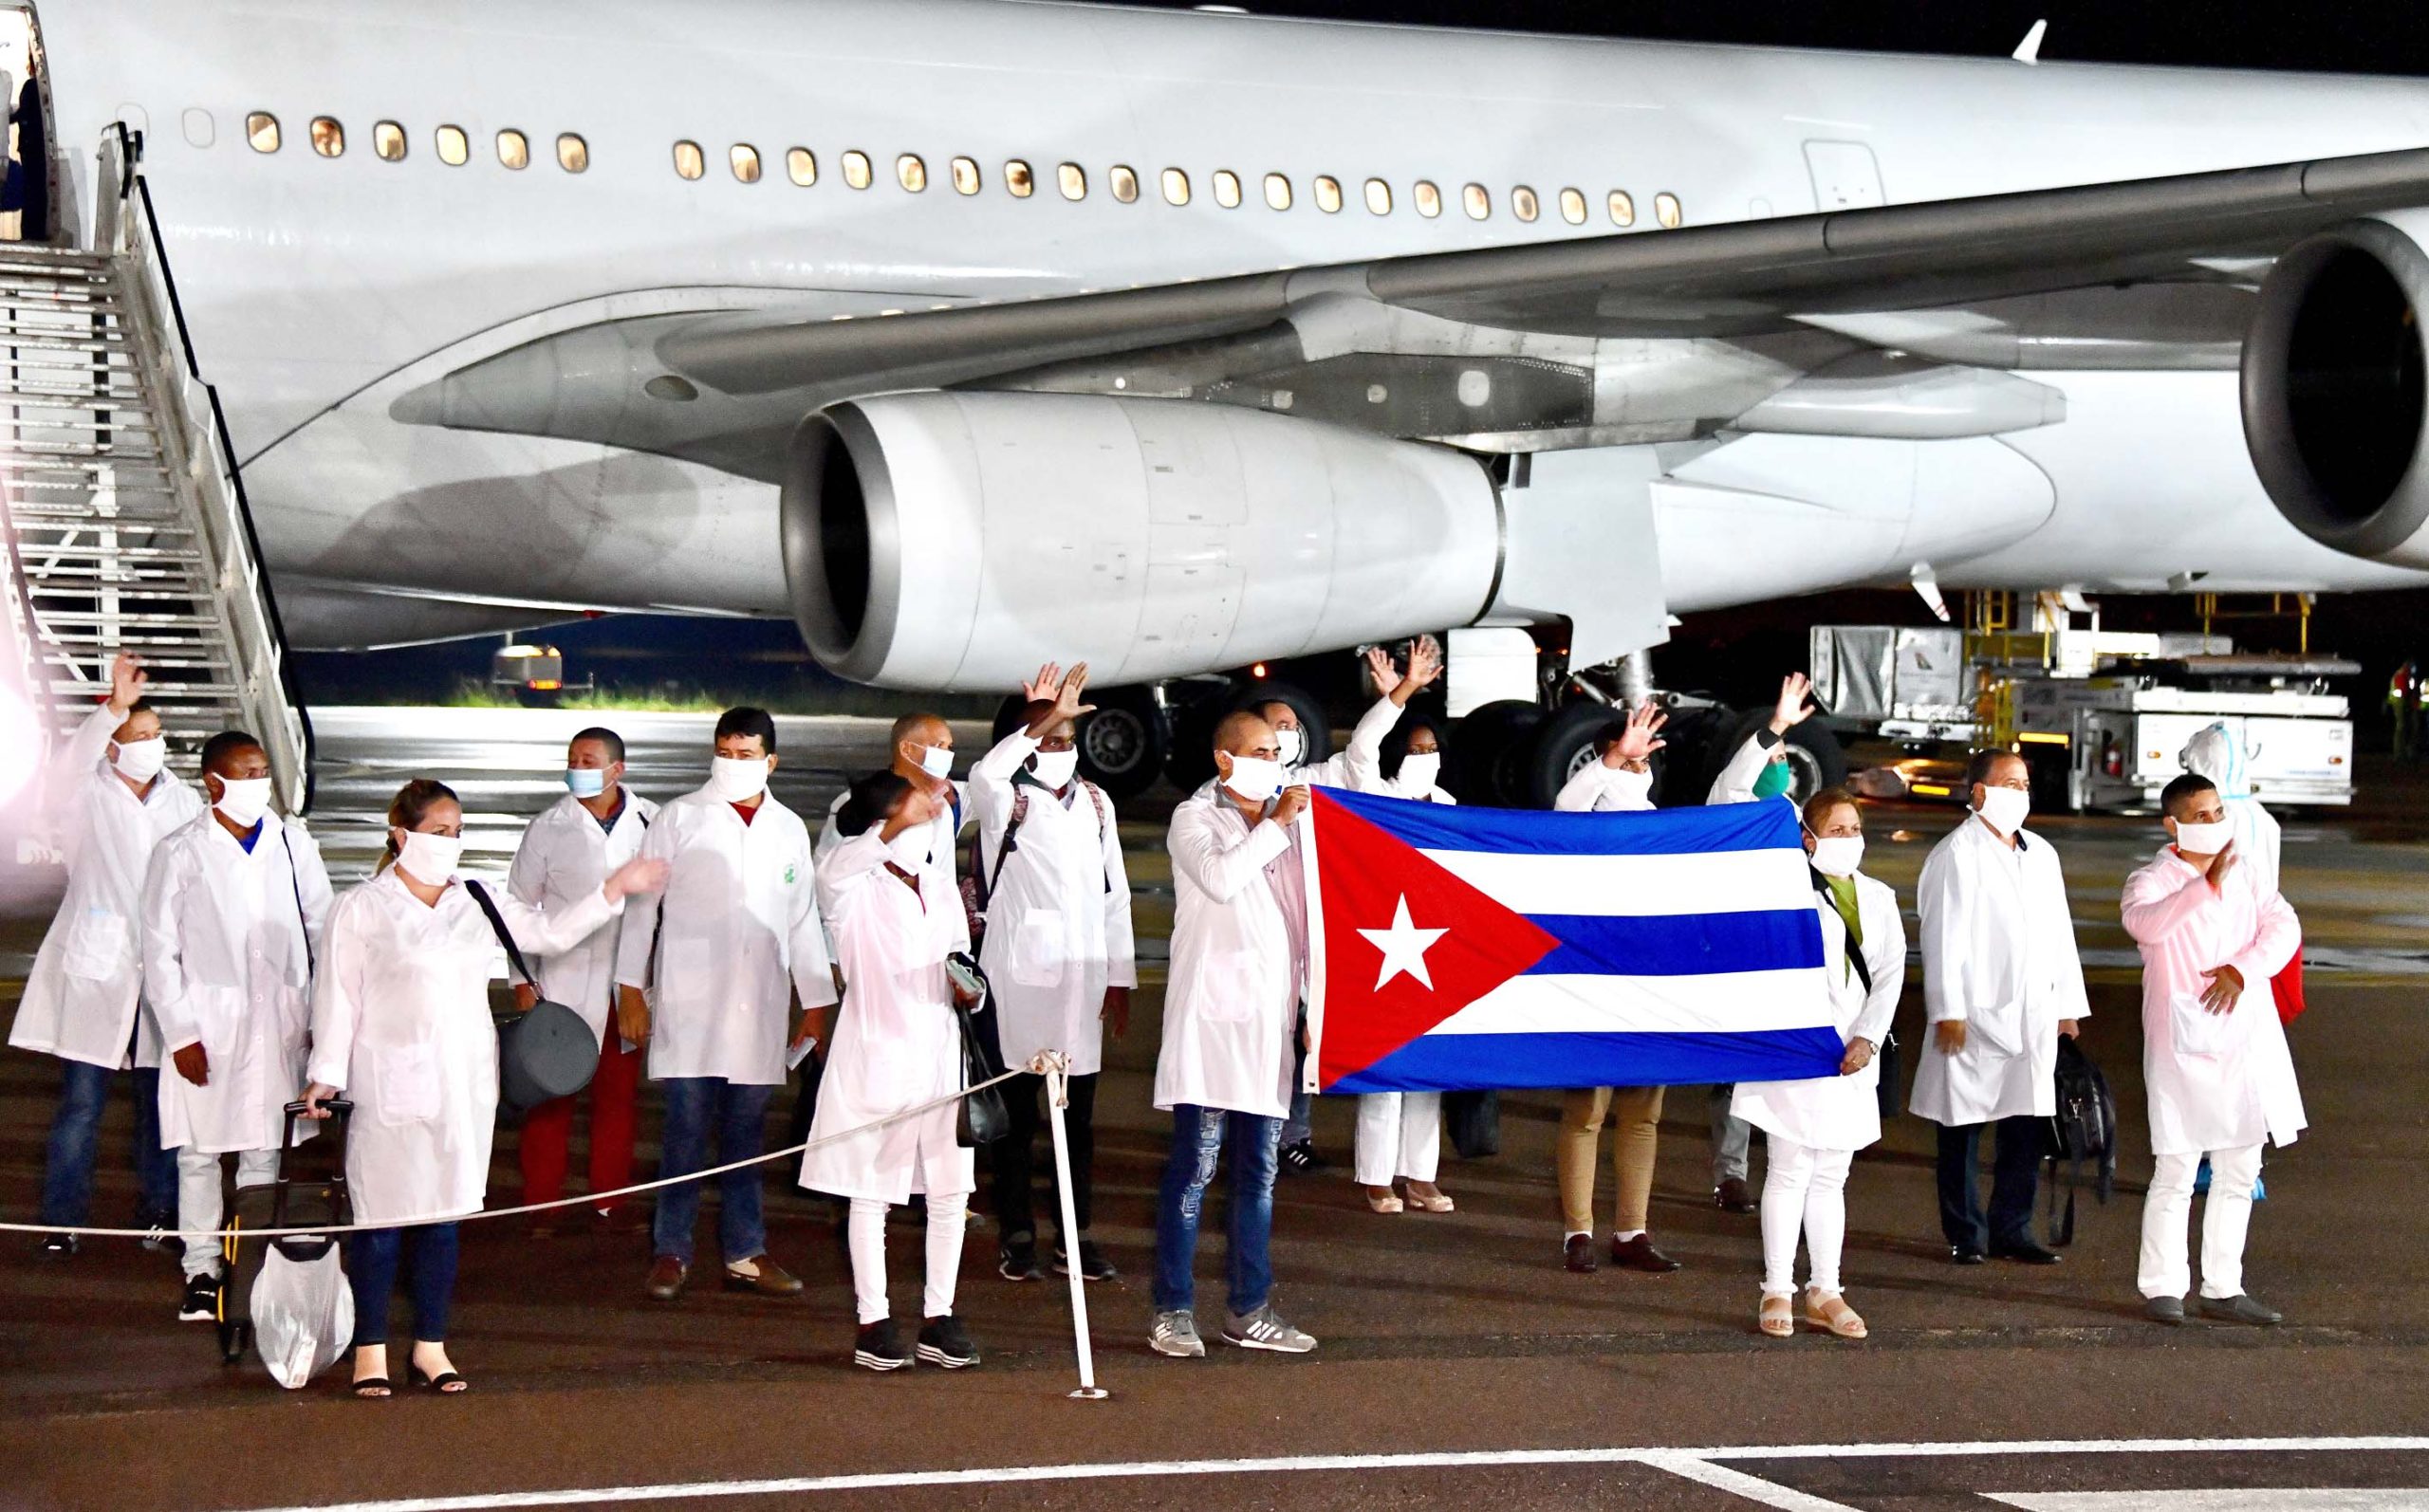 Medical Internationalism: The Cuban Response to the Pandemic